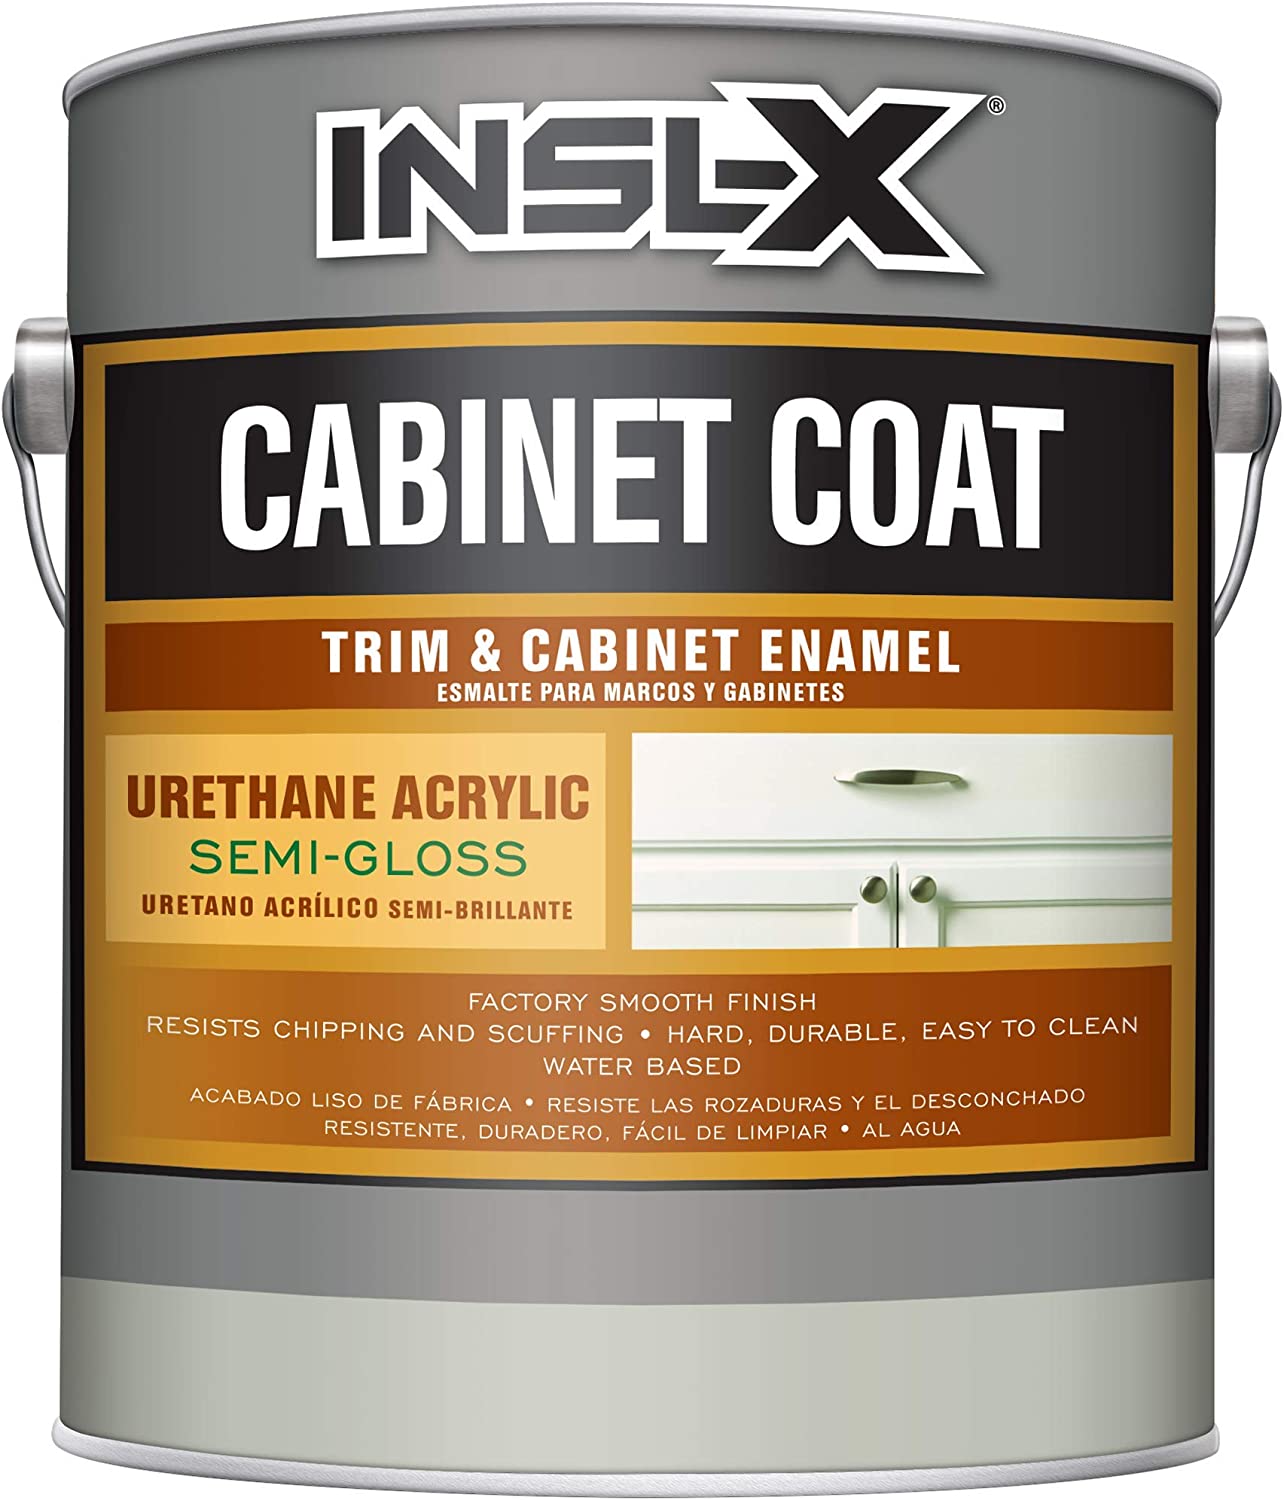 INSL-X Cabinet Coat - Urethane Acrylic Semi-Gloss [...]